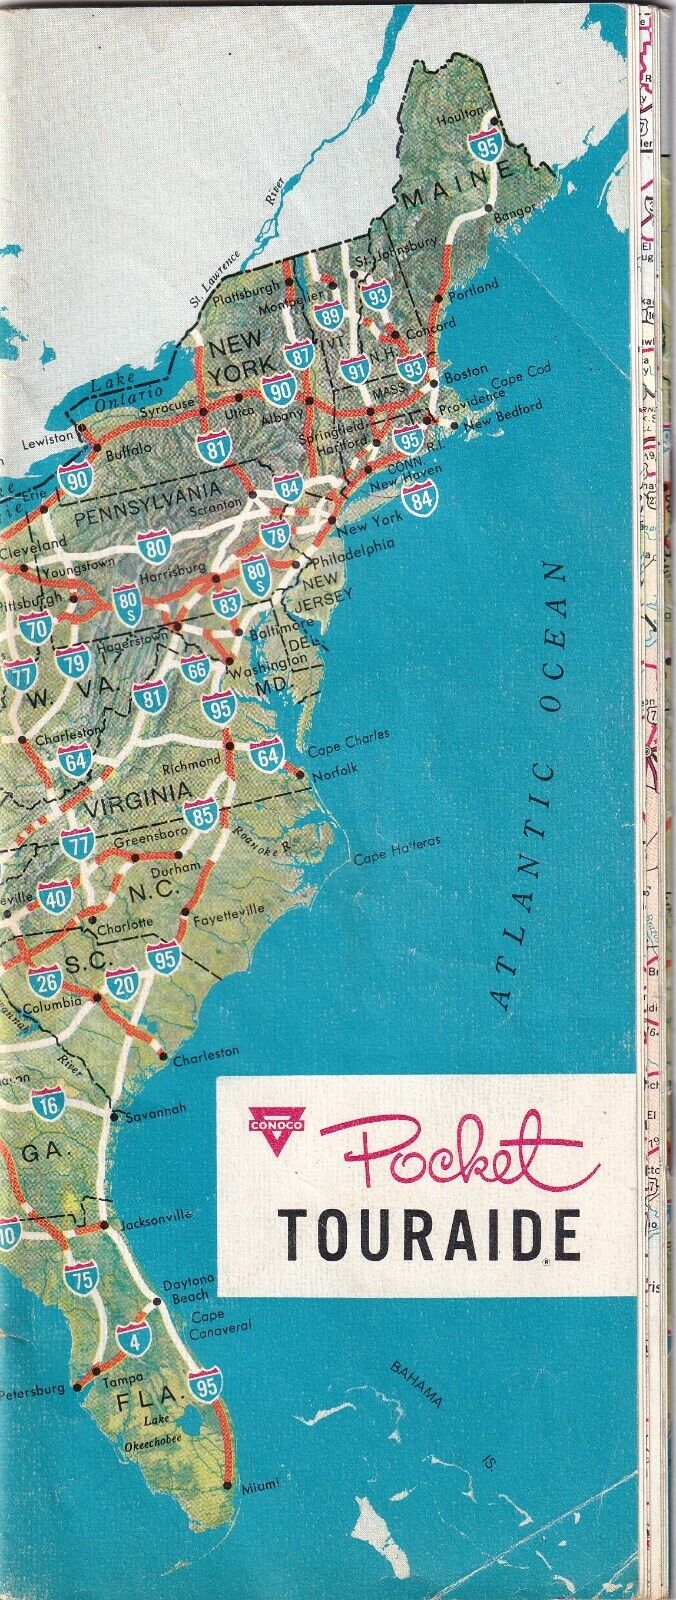 Vintage 1963 Conoco Pocket Touraide Travel Guide Map